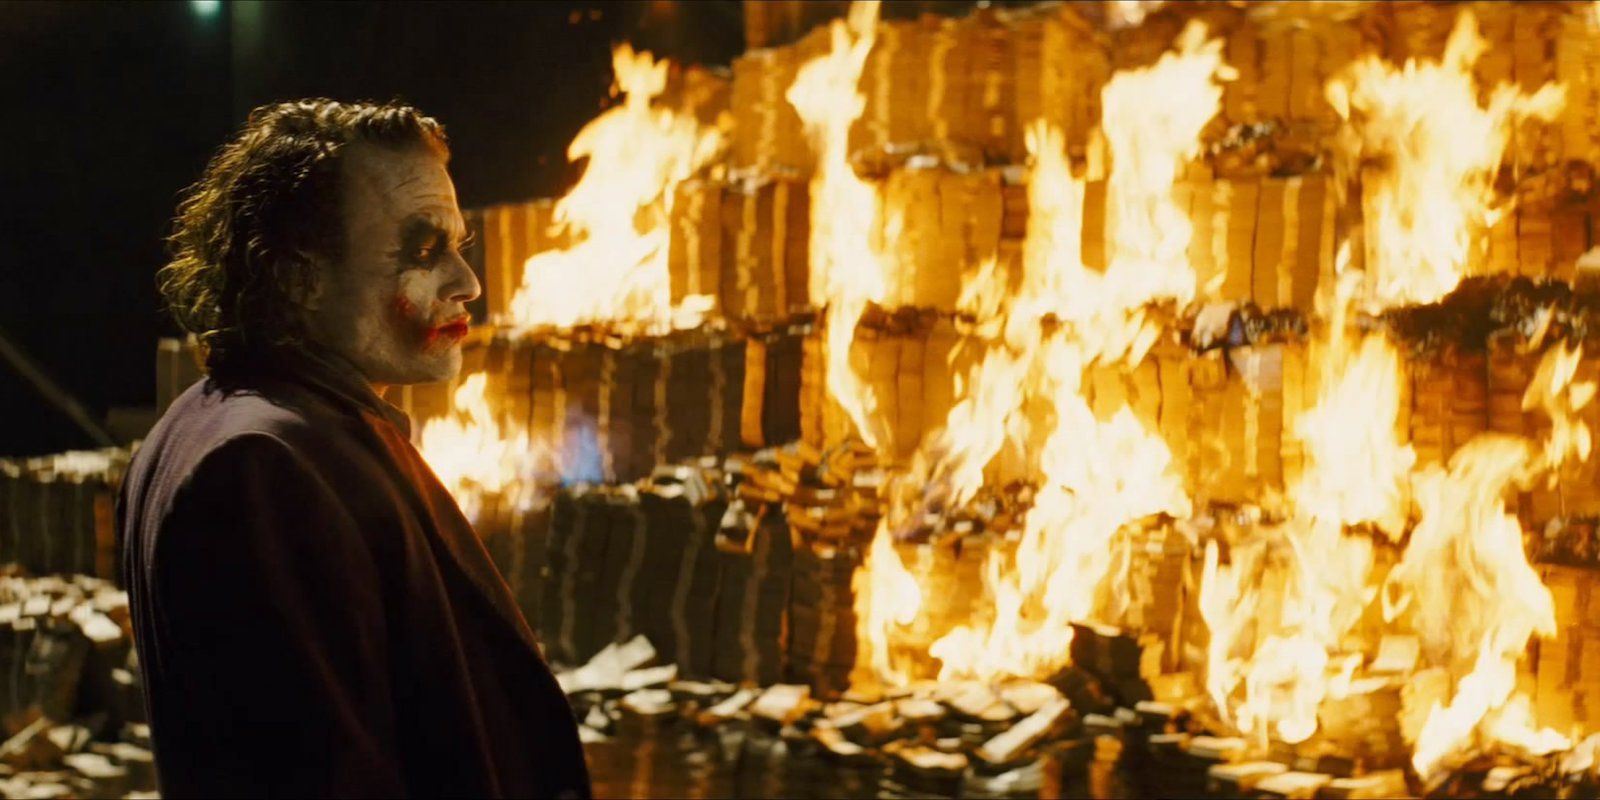 Heath Ledger as the Joker burning money in The Dark Knight